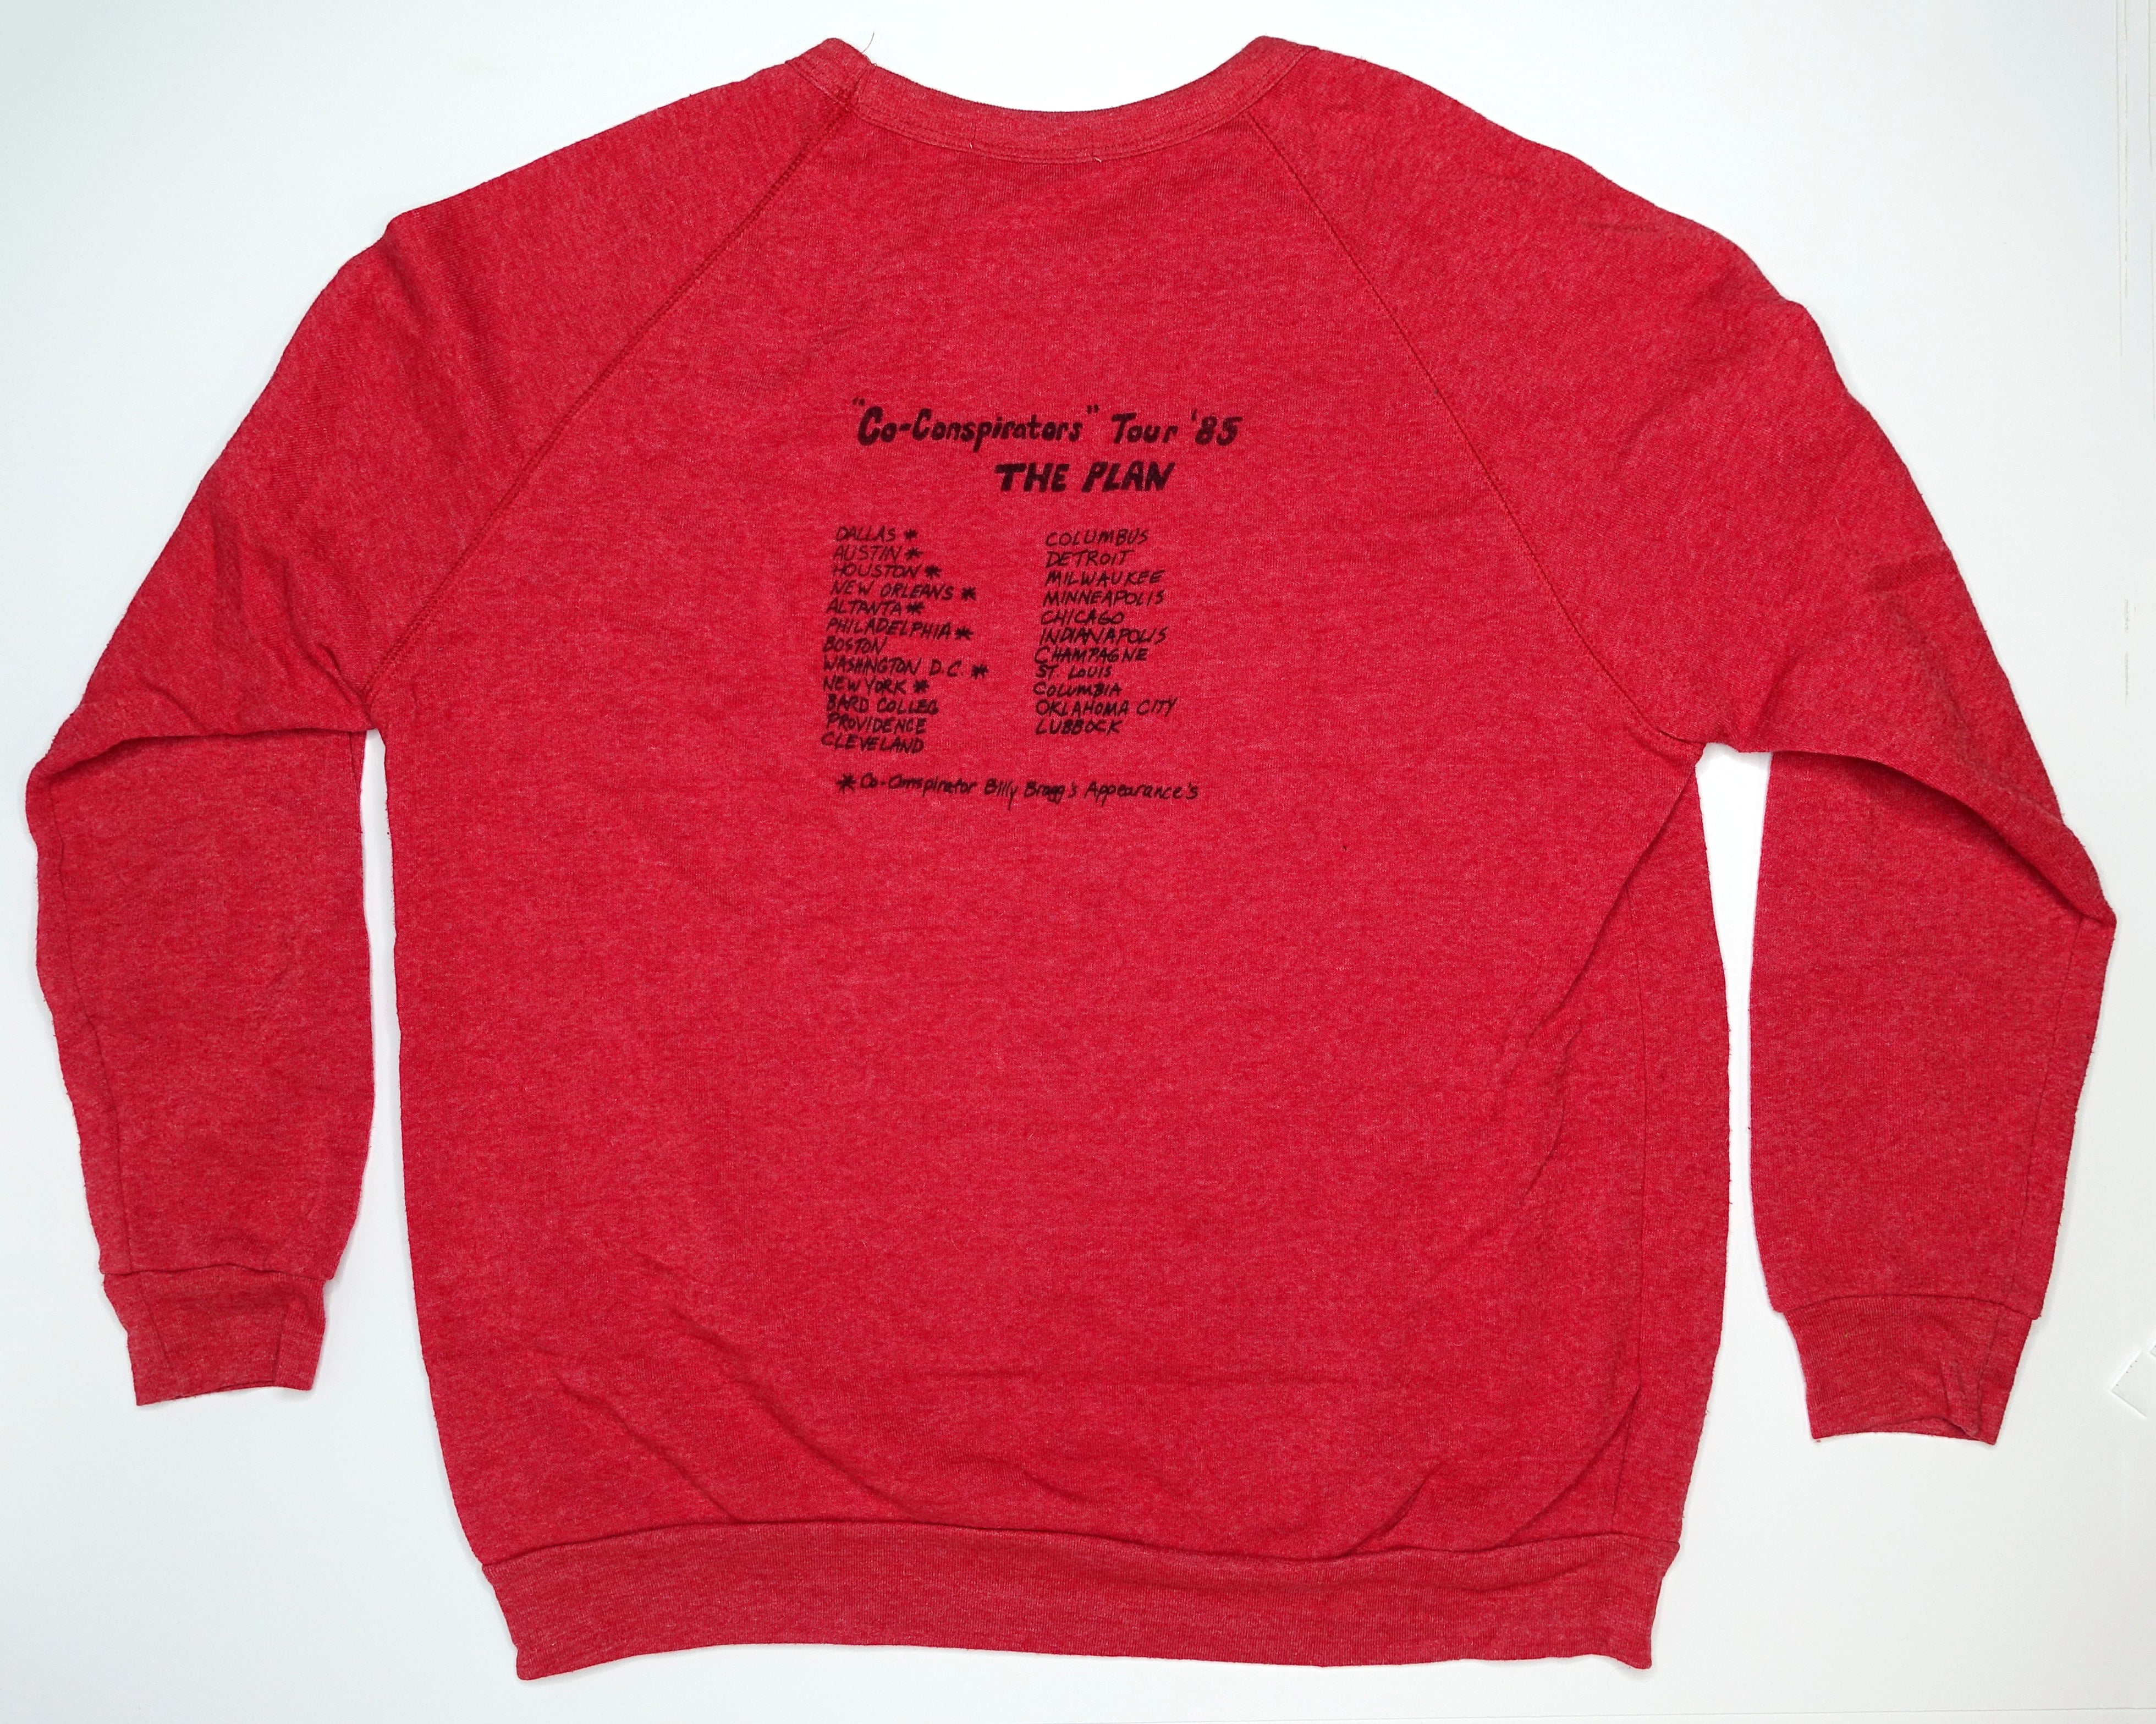 Minutemen - World Salvation Ministry / Co-Conspirators 1985 Tour (Bootleg By Me) Sweat Shirt Size XL